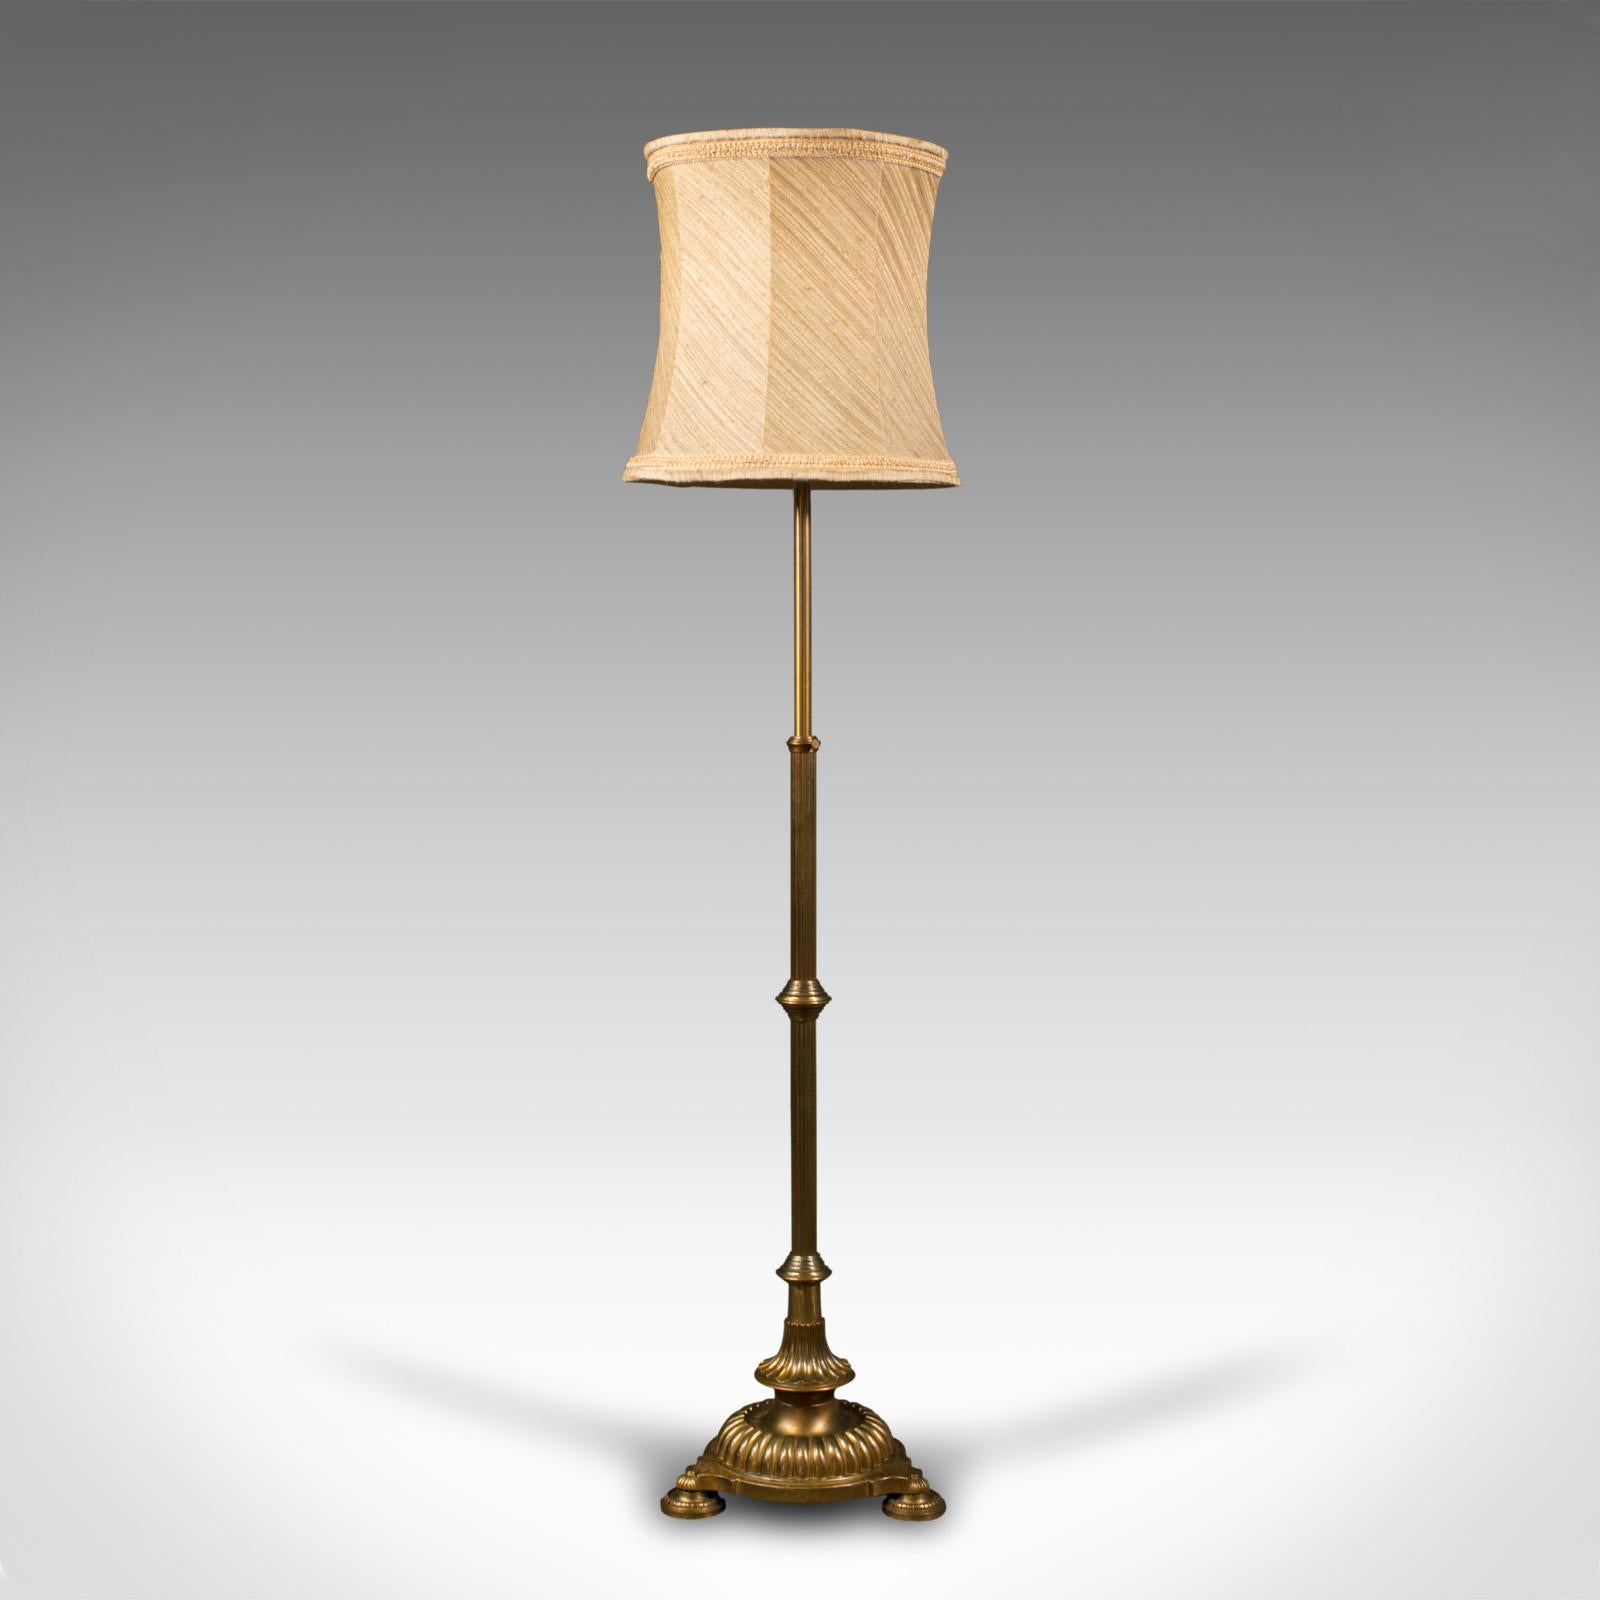 British Vintage Standard Lamp, English, Brass, Adjustable Reading Light, 1940 For Sale